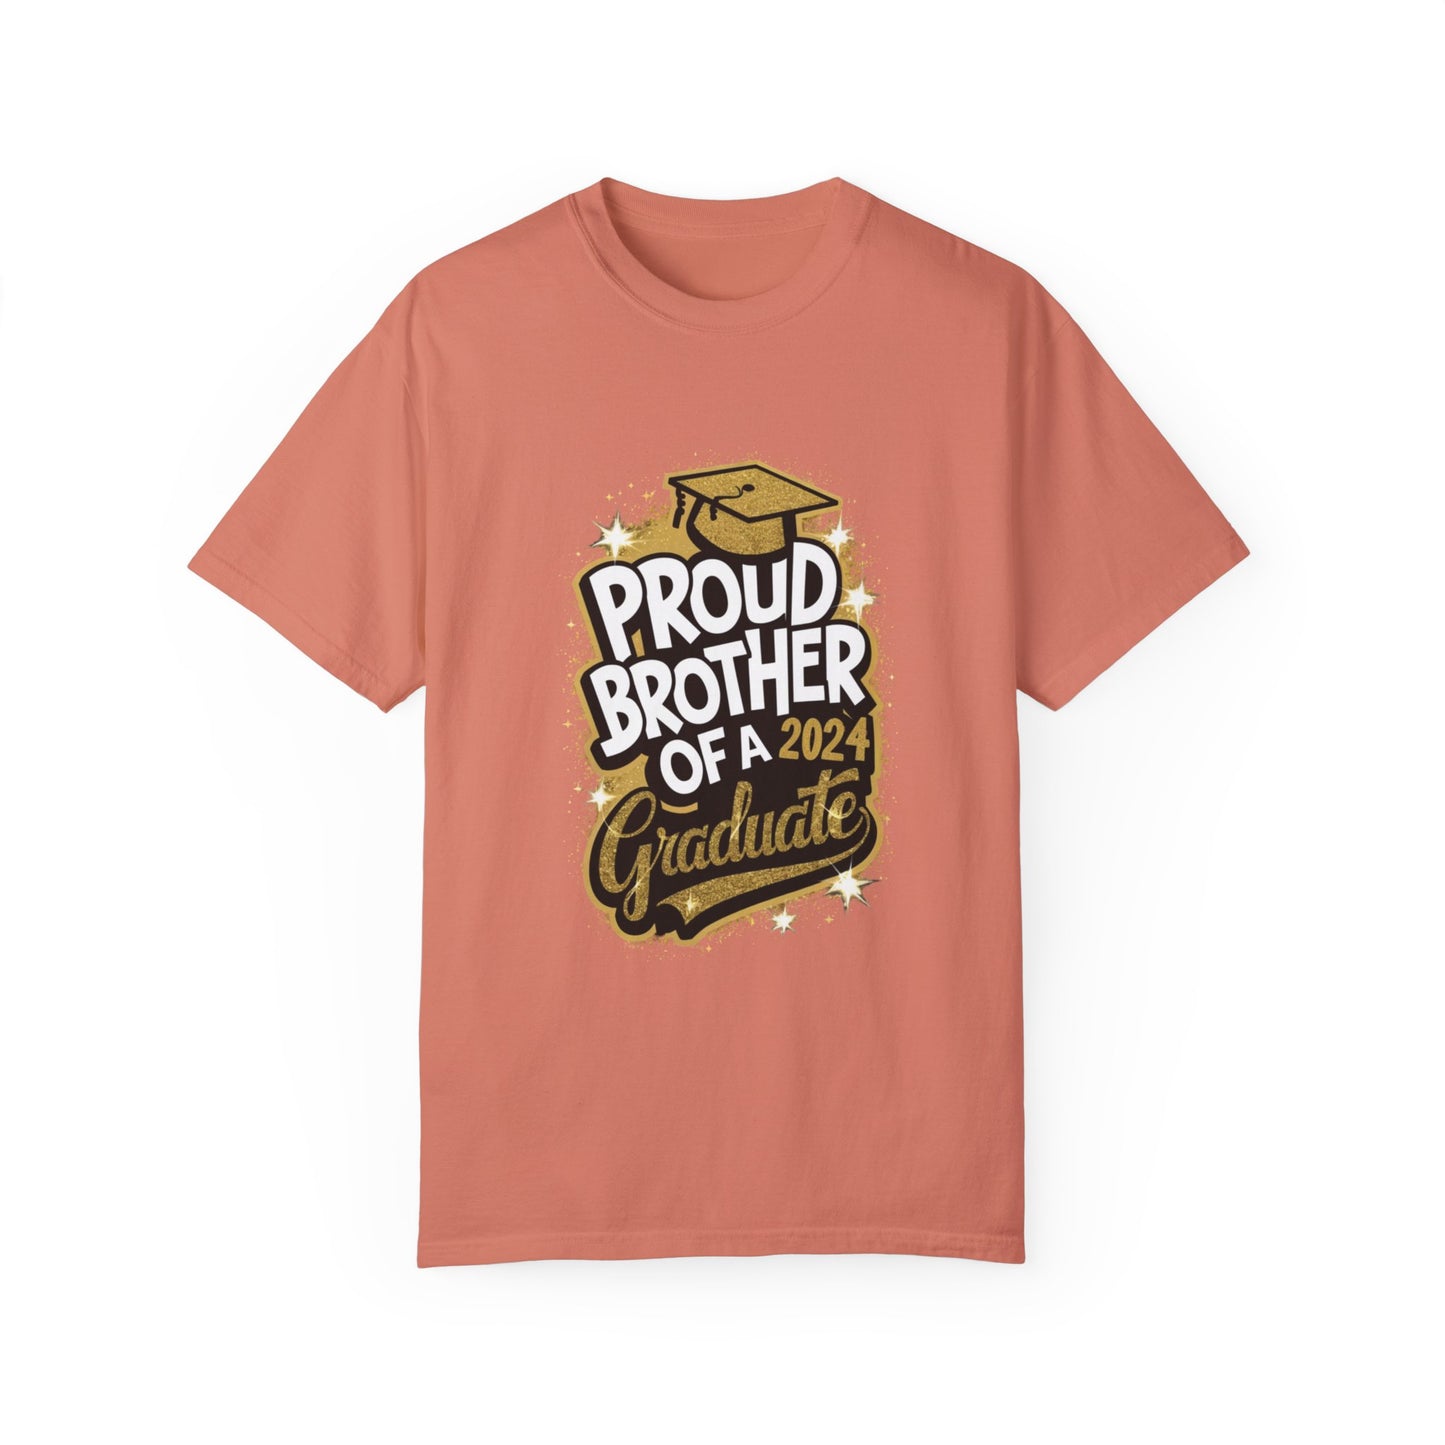 Proud Brother of a 2024 Graduate Unisex Garment-dyed T-shirt Cotton Funny Humorous Graphic Soft Premium Unisex Men Women Terracotta T-shirt Birthday Gift-14